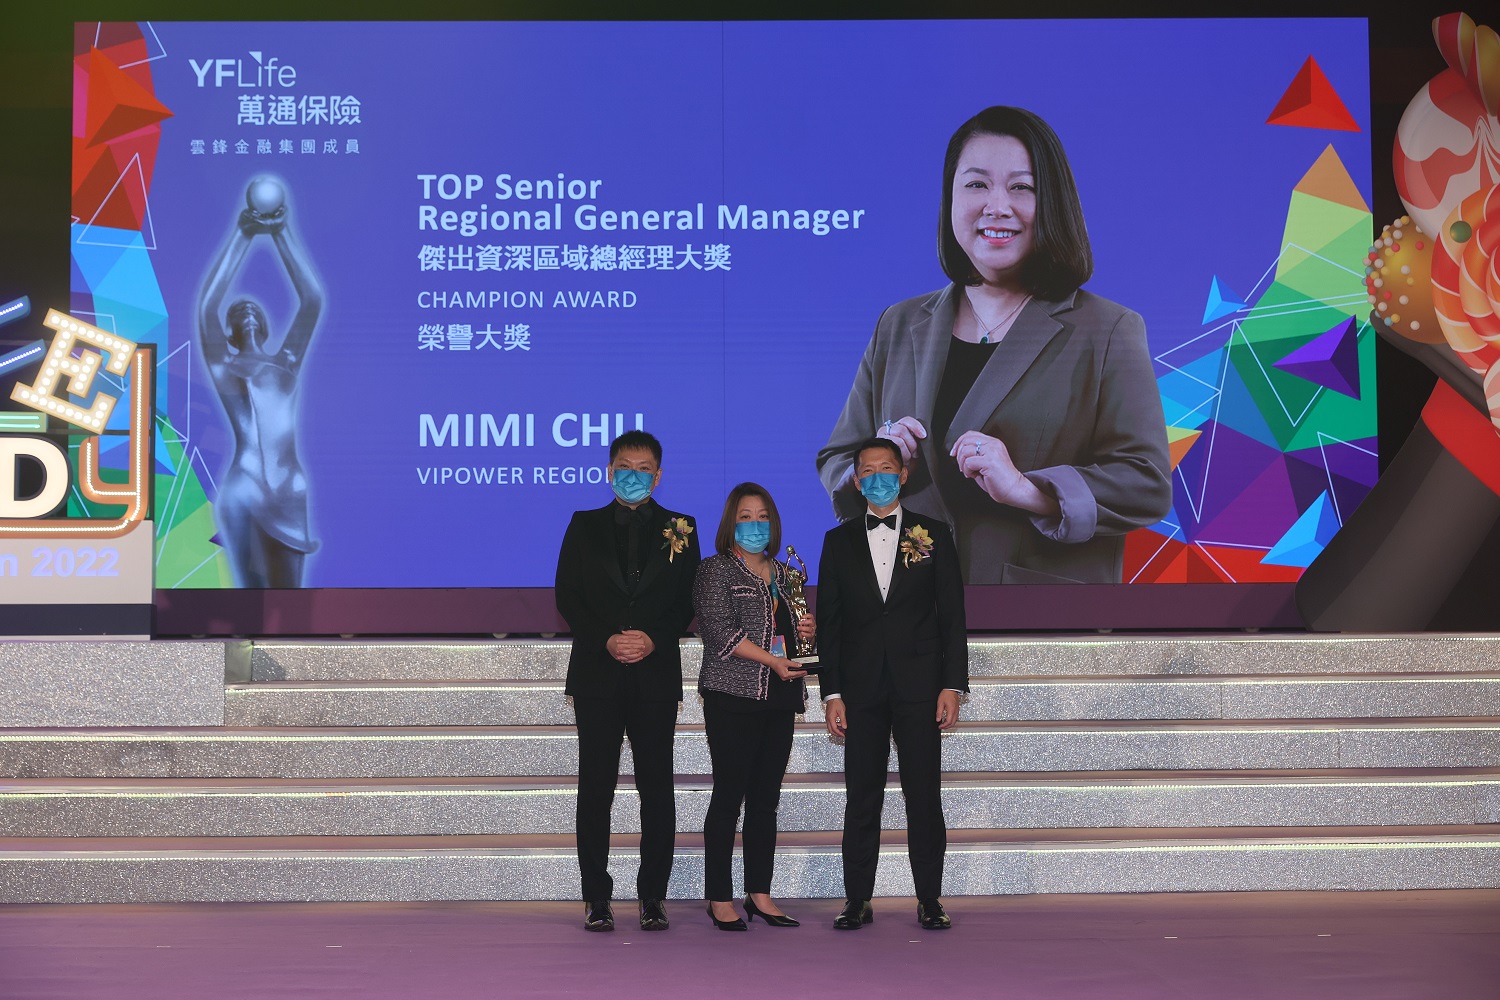 Ms. Mimi Chu, Champion Award winner of Top Senior Regional General Manager. 